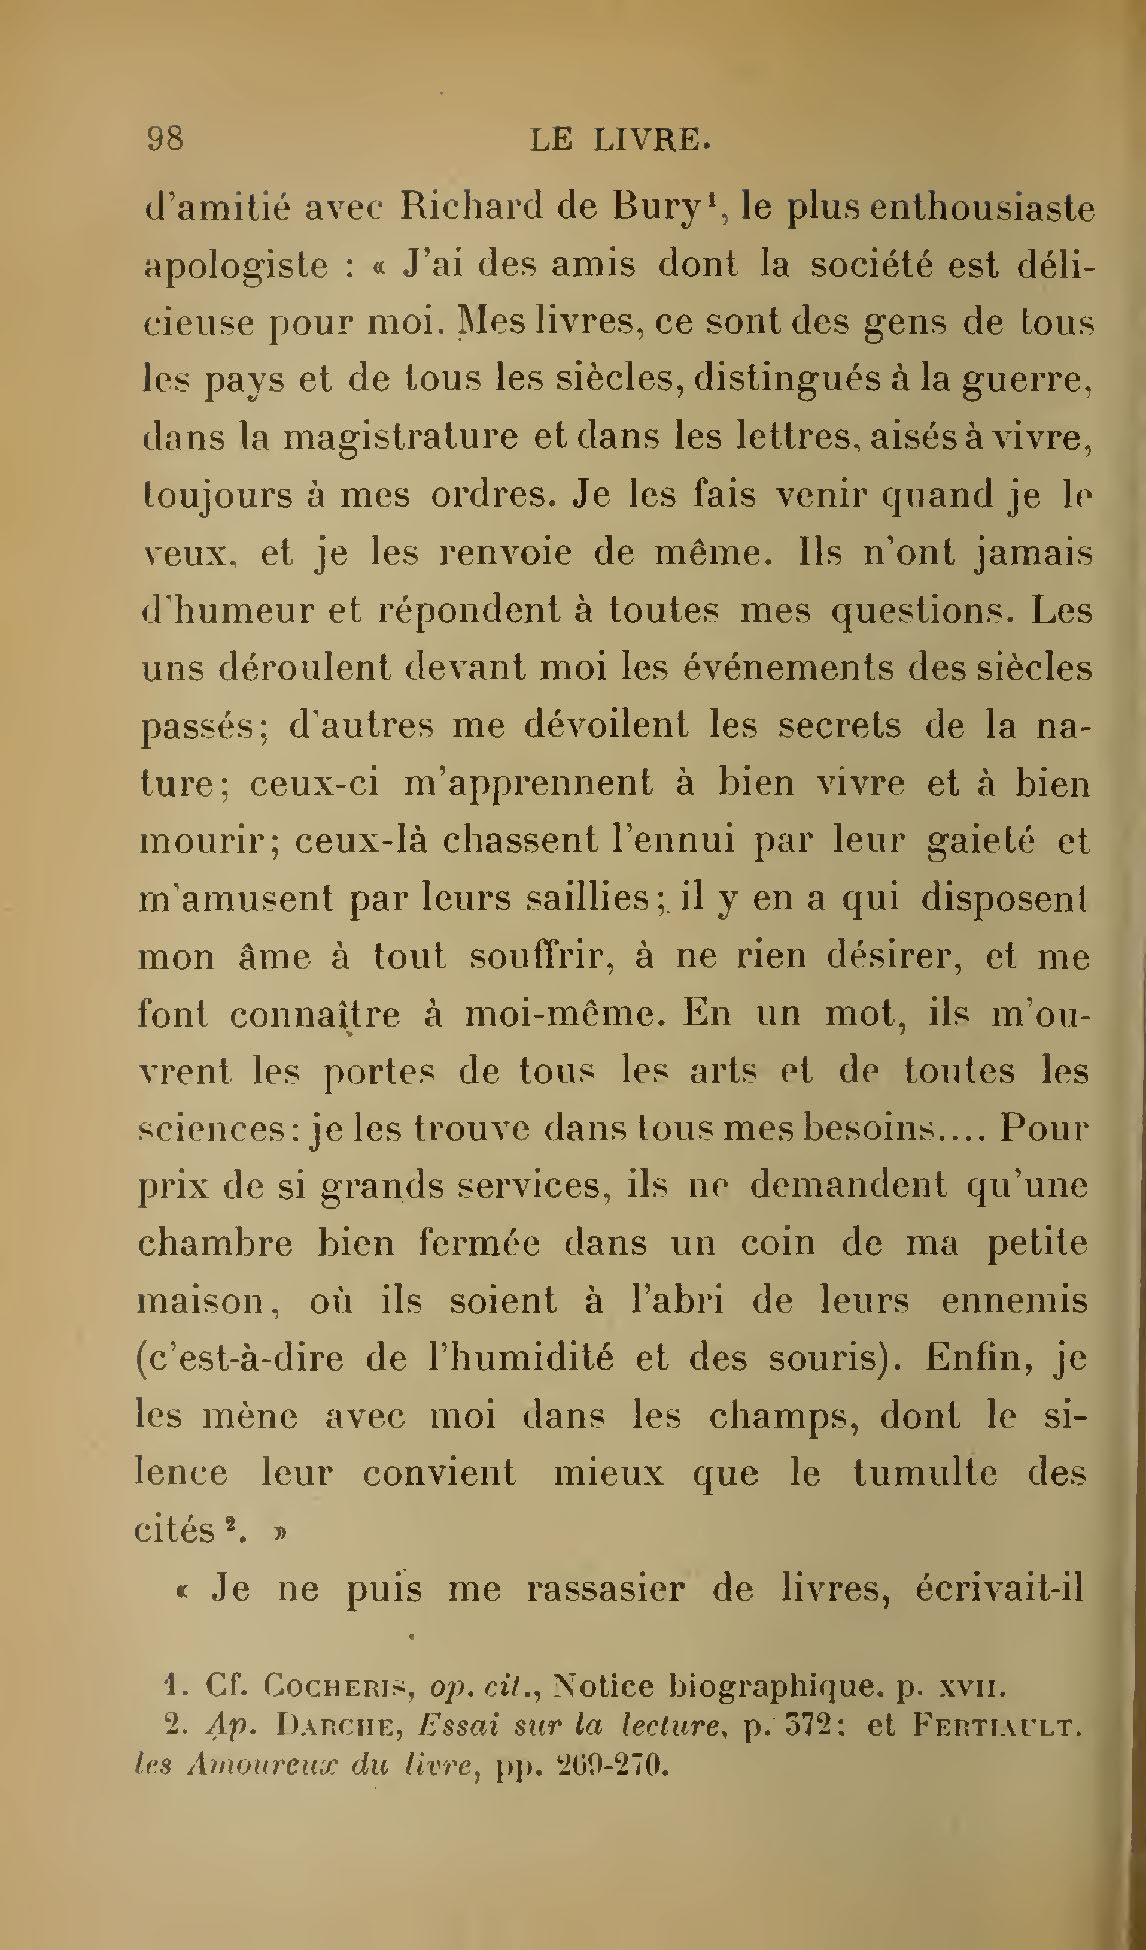 Albert Cim, Le Livre, t. I, p. 98.